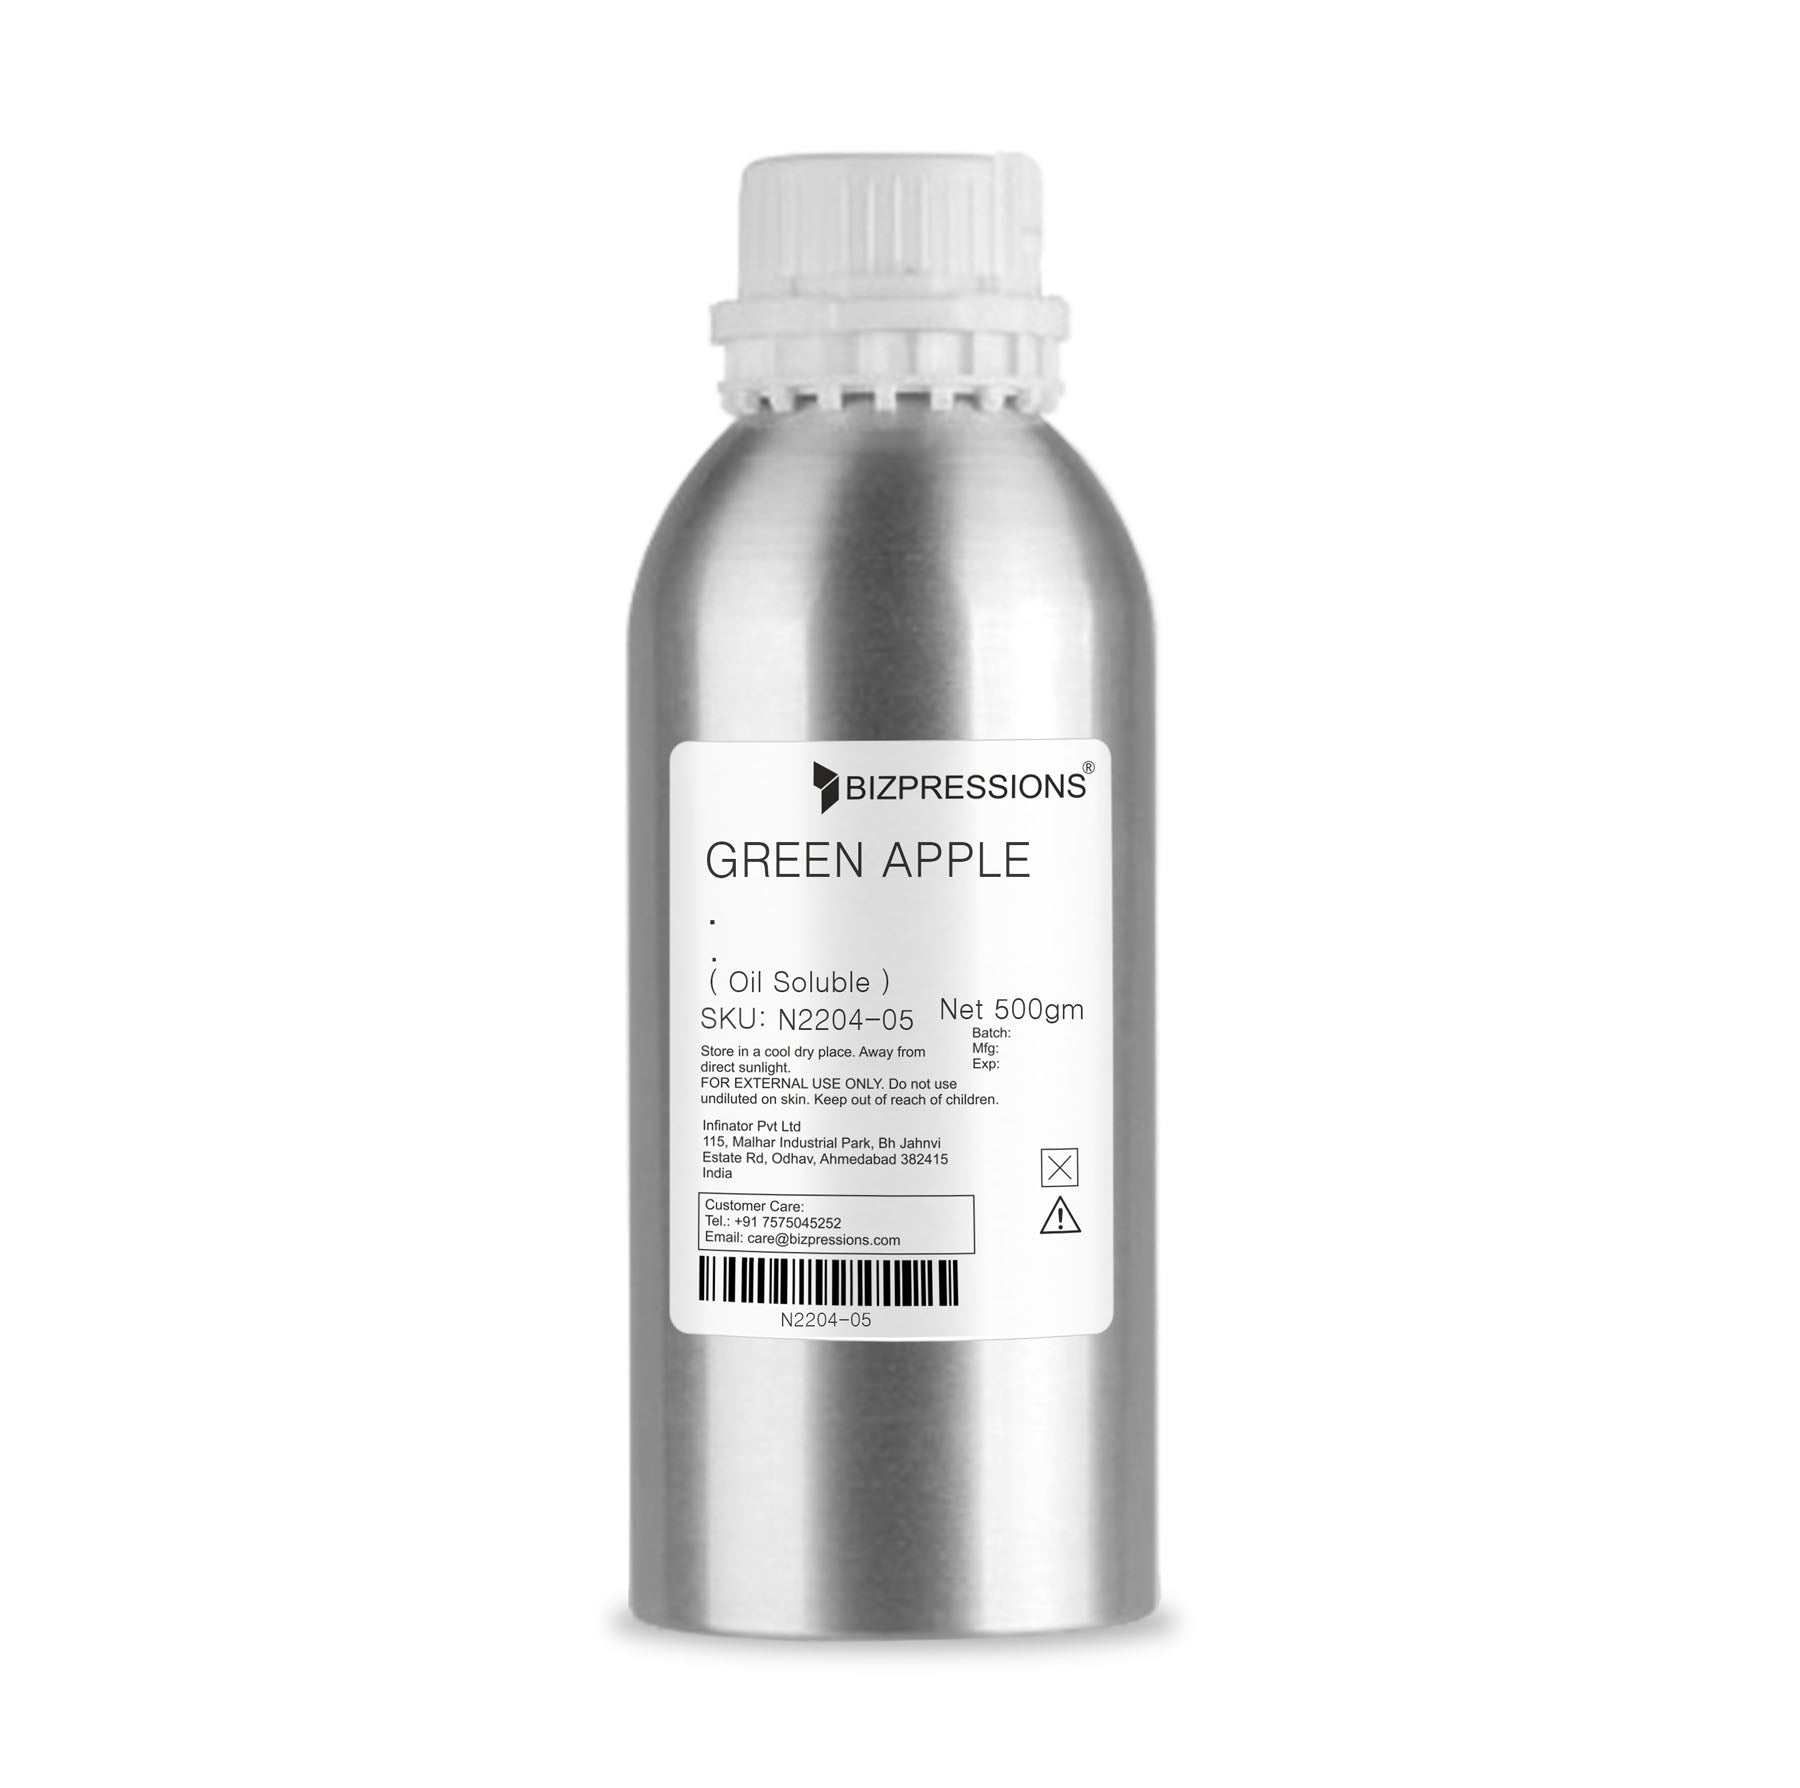 GREEN APPLE - Fragrance ( Oil Soluble ) - 500 gm